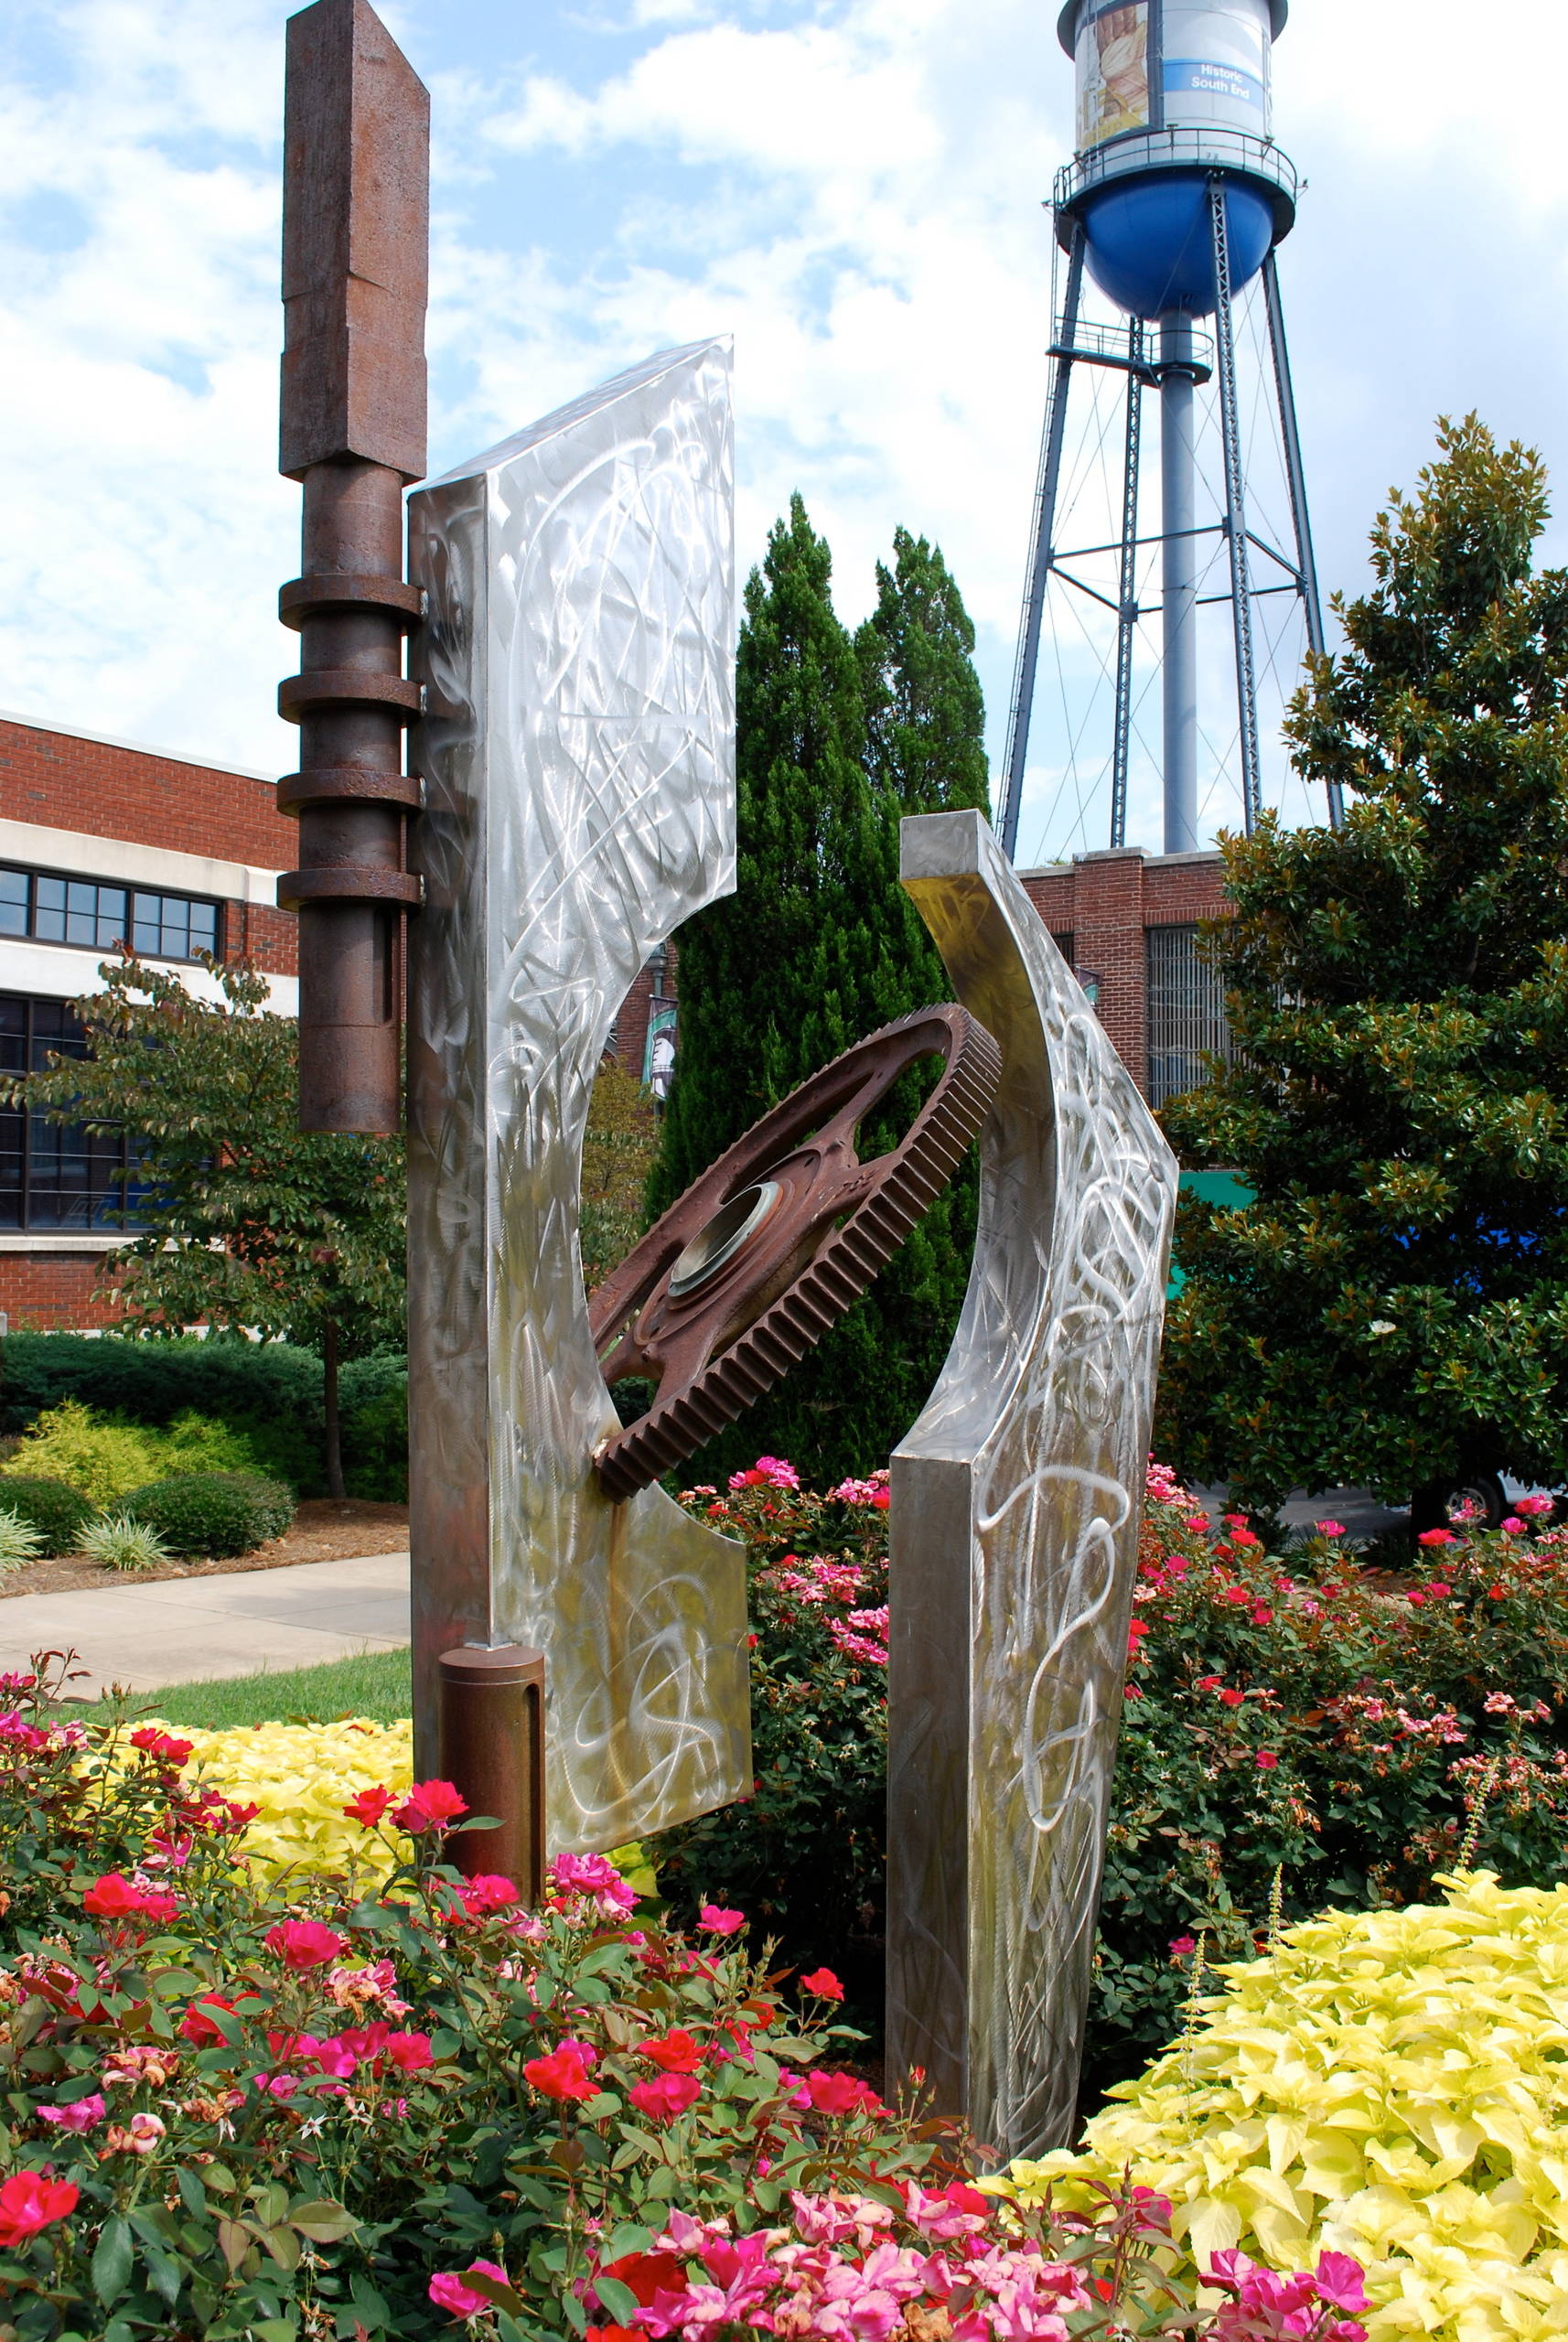 Metal sculpture in design studio courtyard, Charlotte, NC